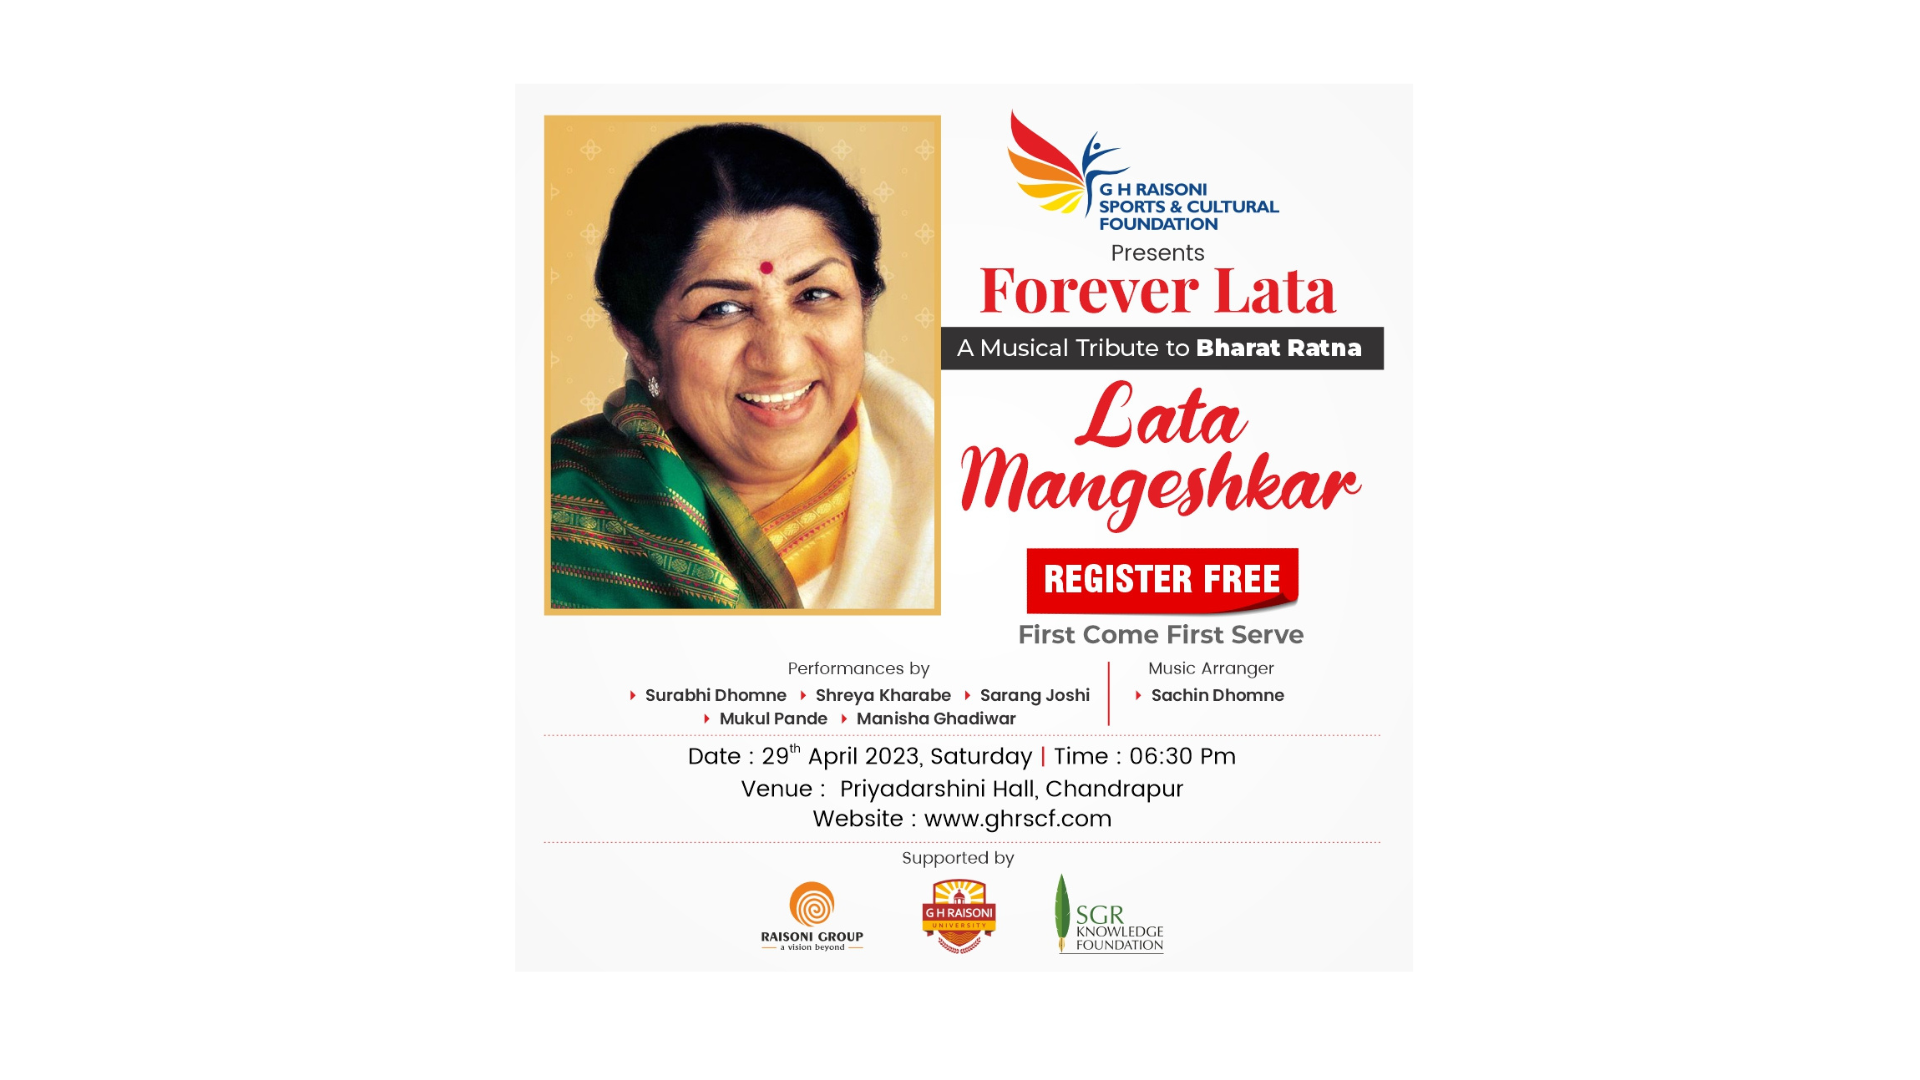 "Forever Lata", an evergreen show of Lata Mangeshkar's song, Chandrapur, Maharashtra, India